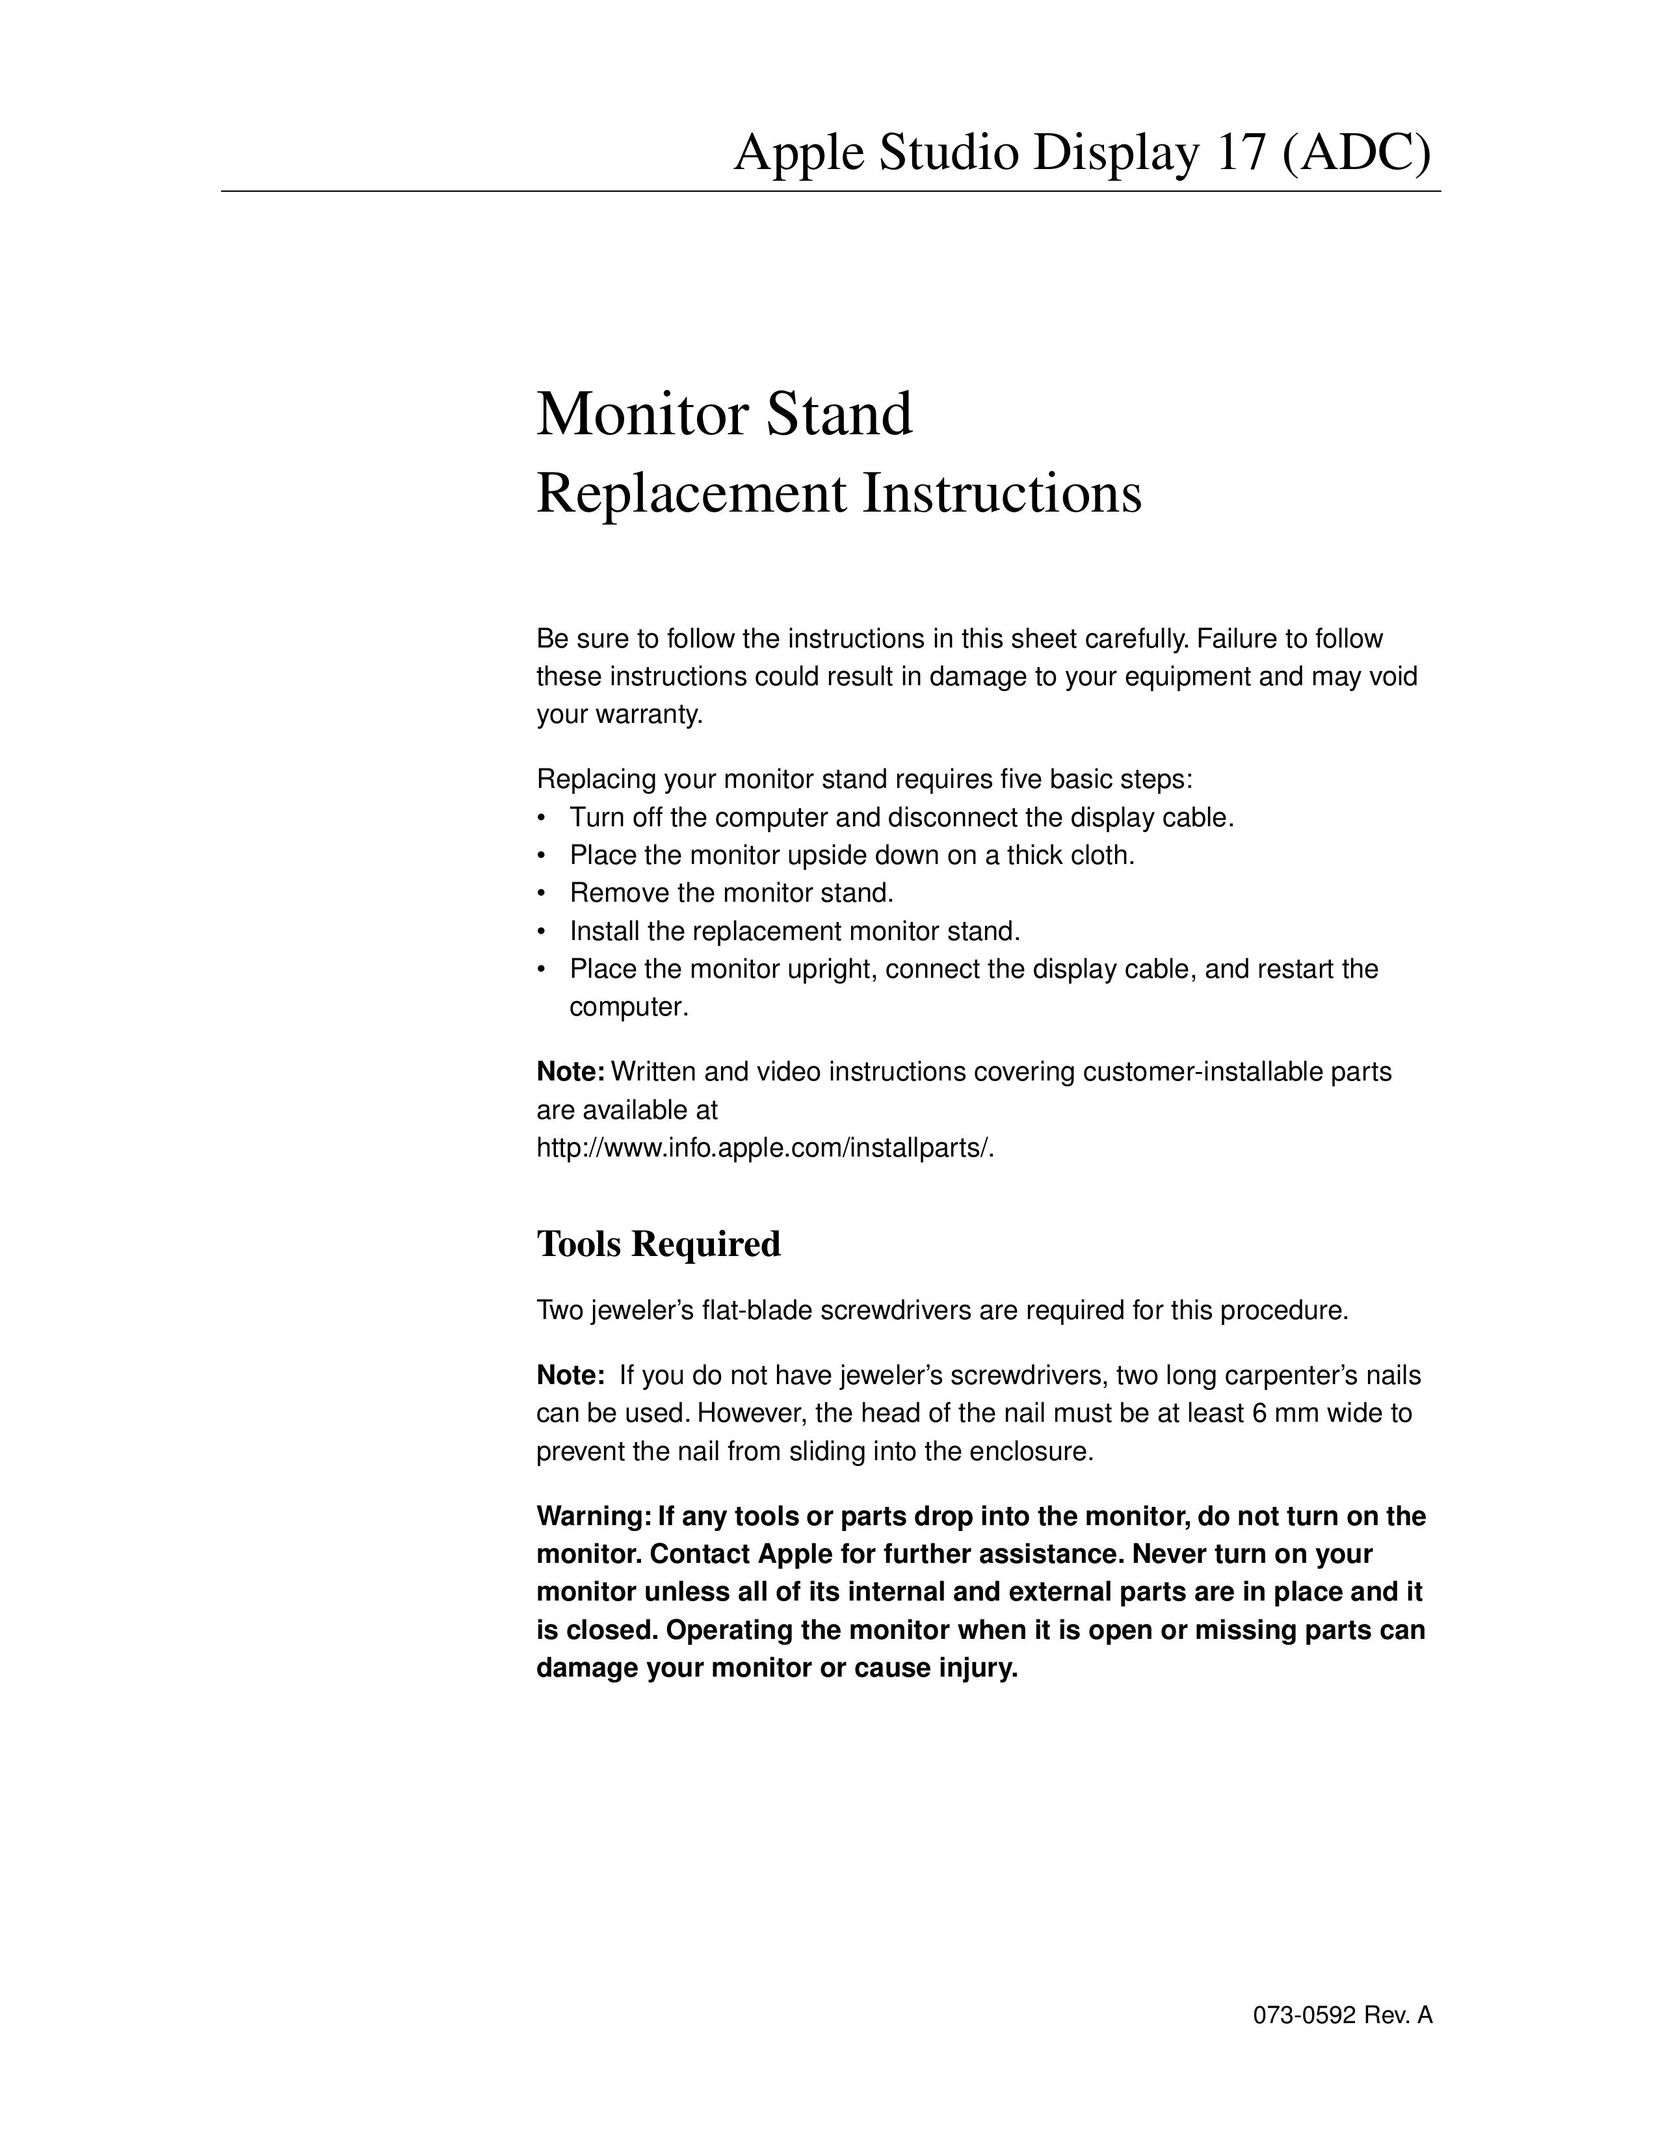 Apple 17 ADC Computer Monitor User Manual